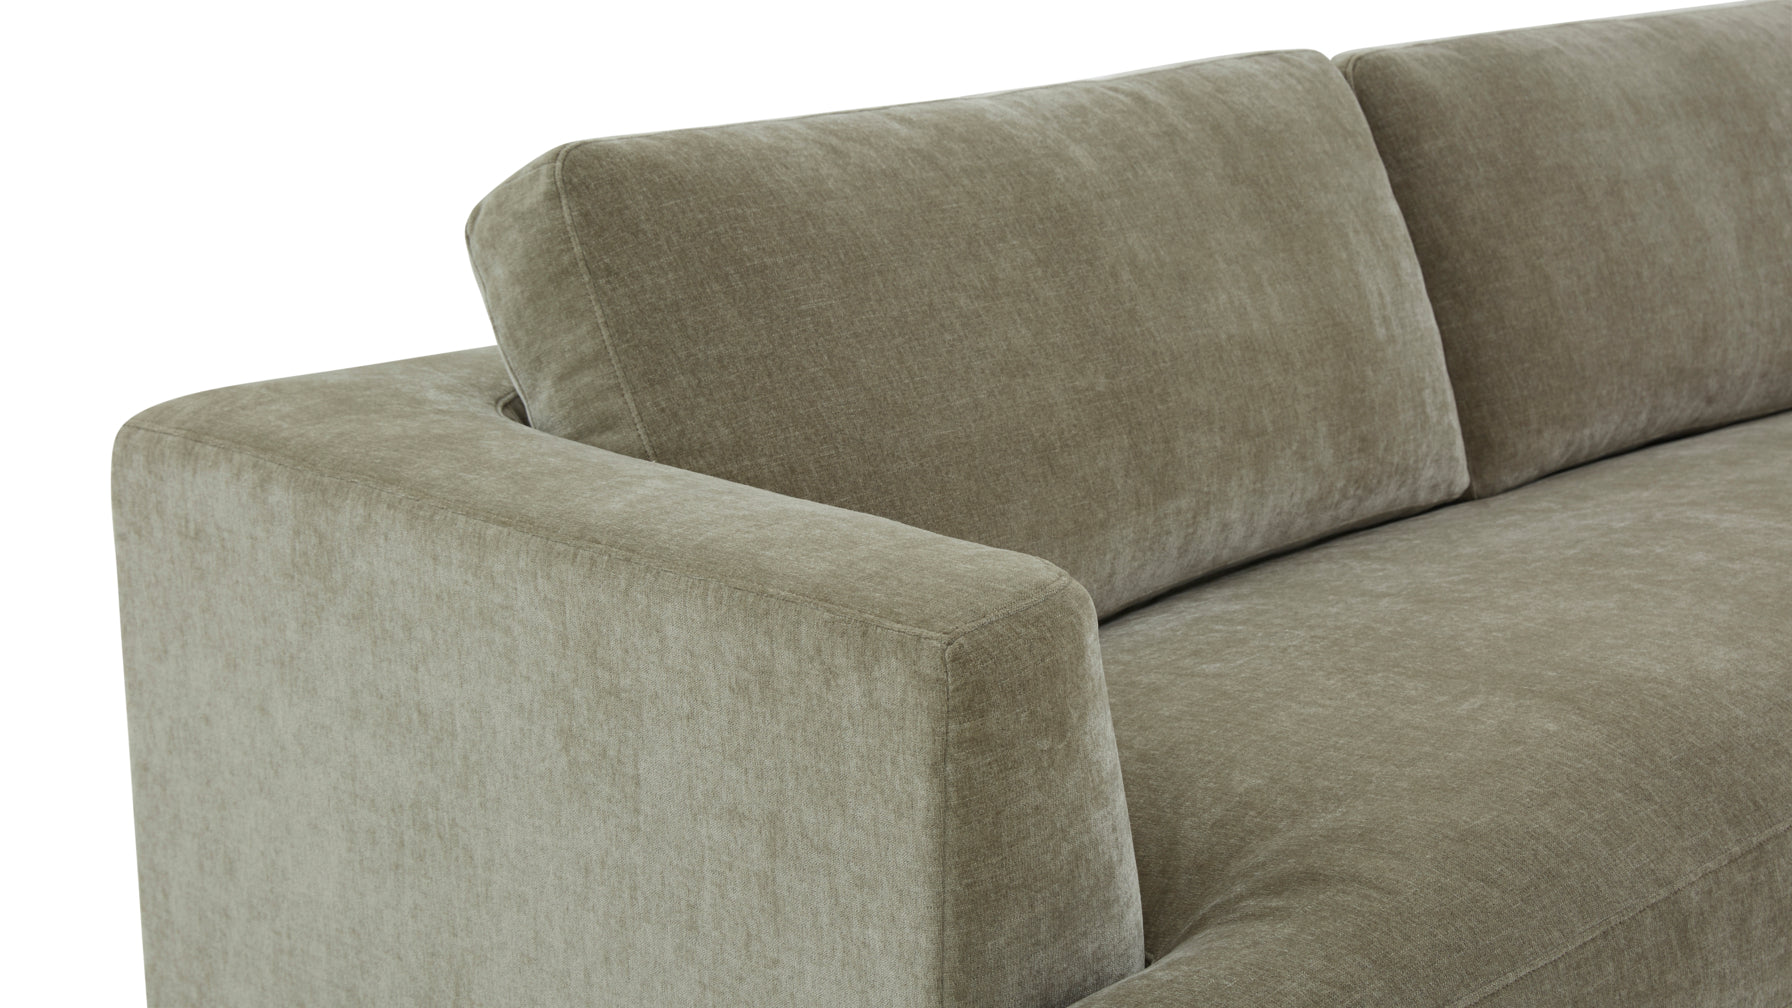 Good Company Sofa, 3 Seater, Artichoke - Image 5